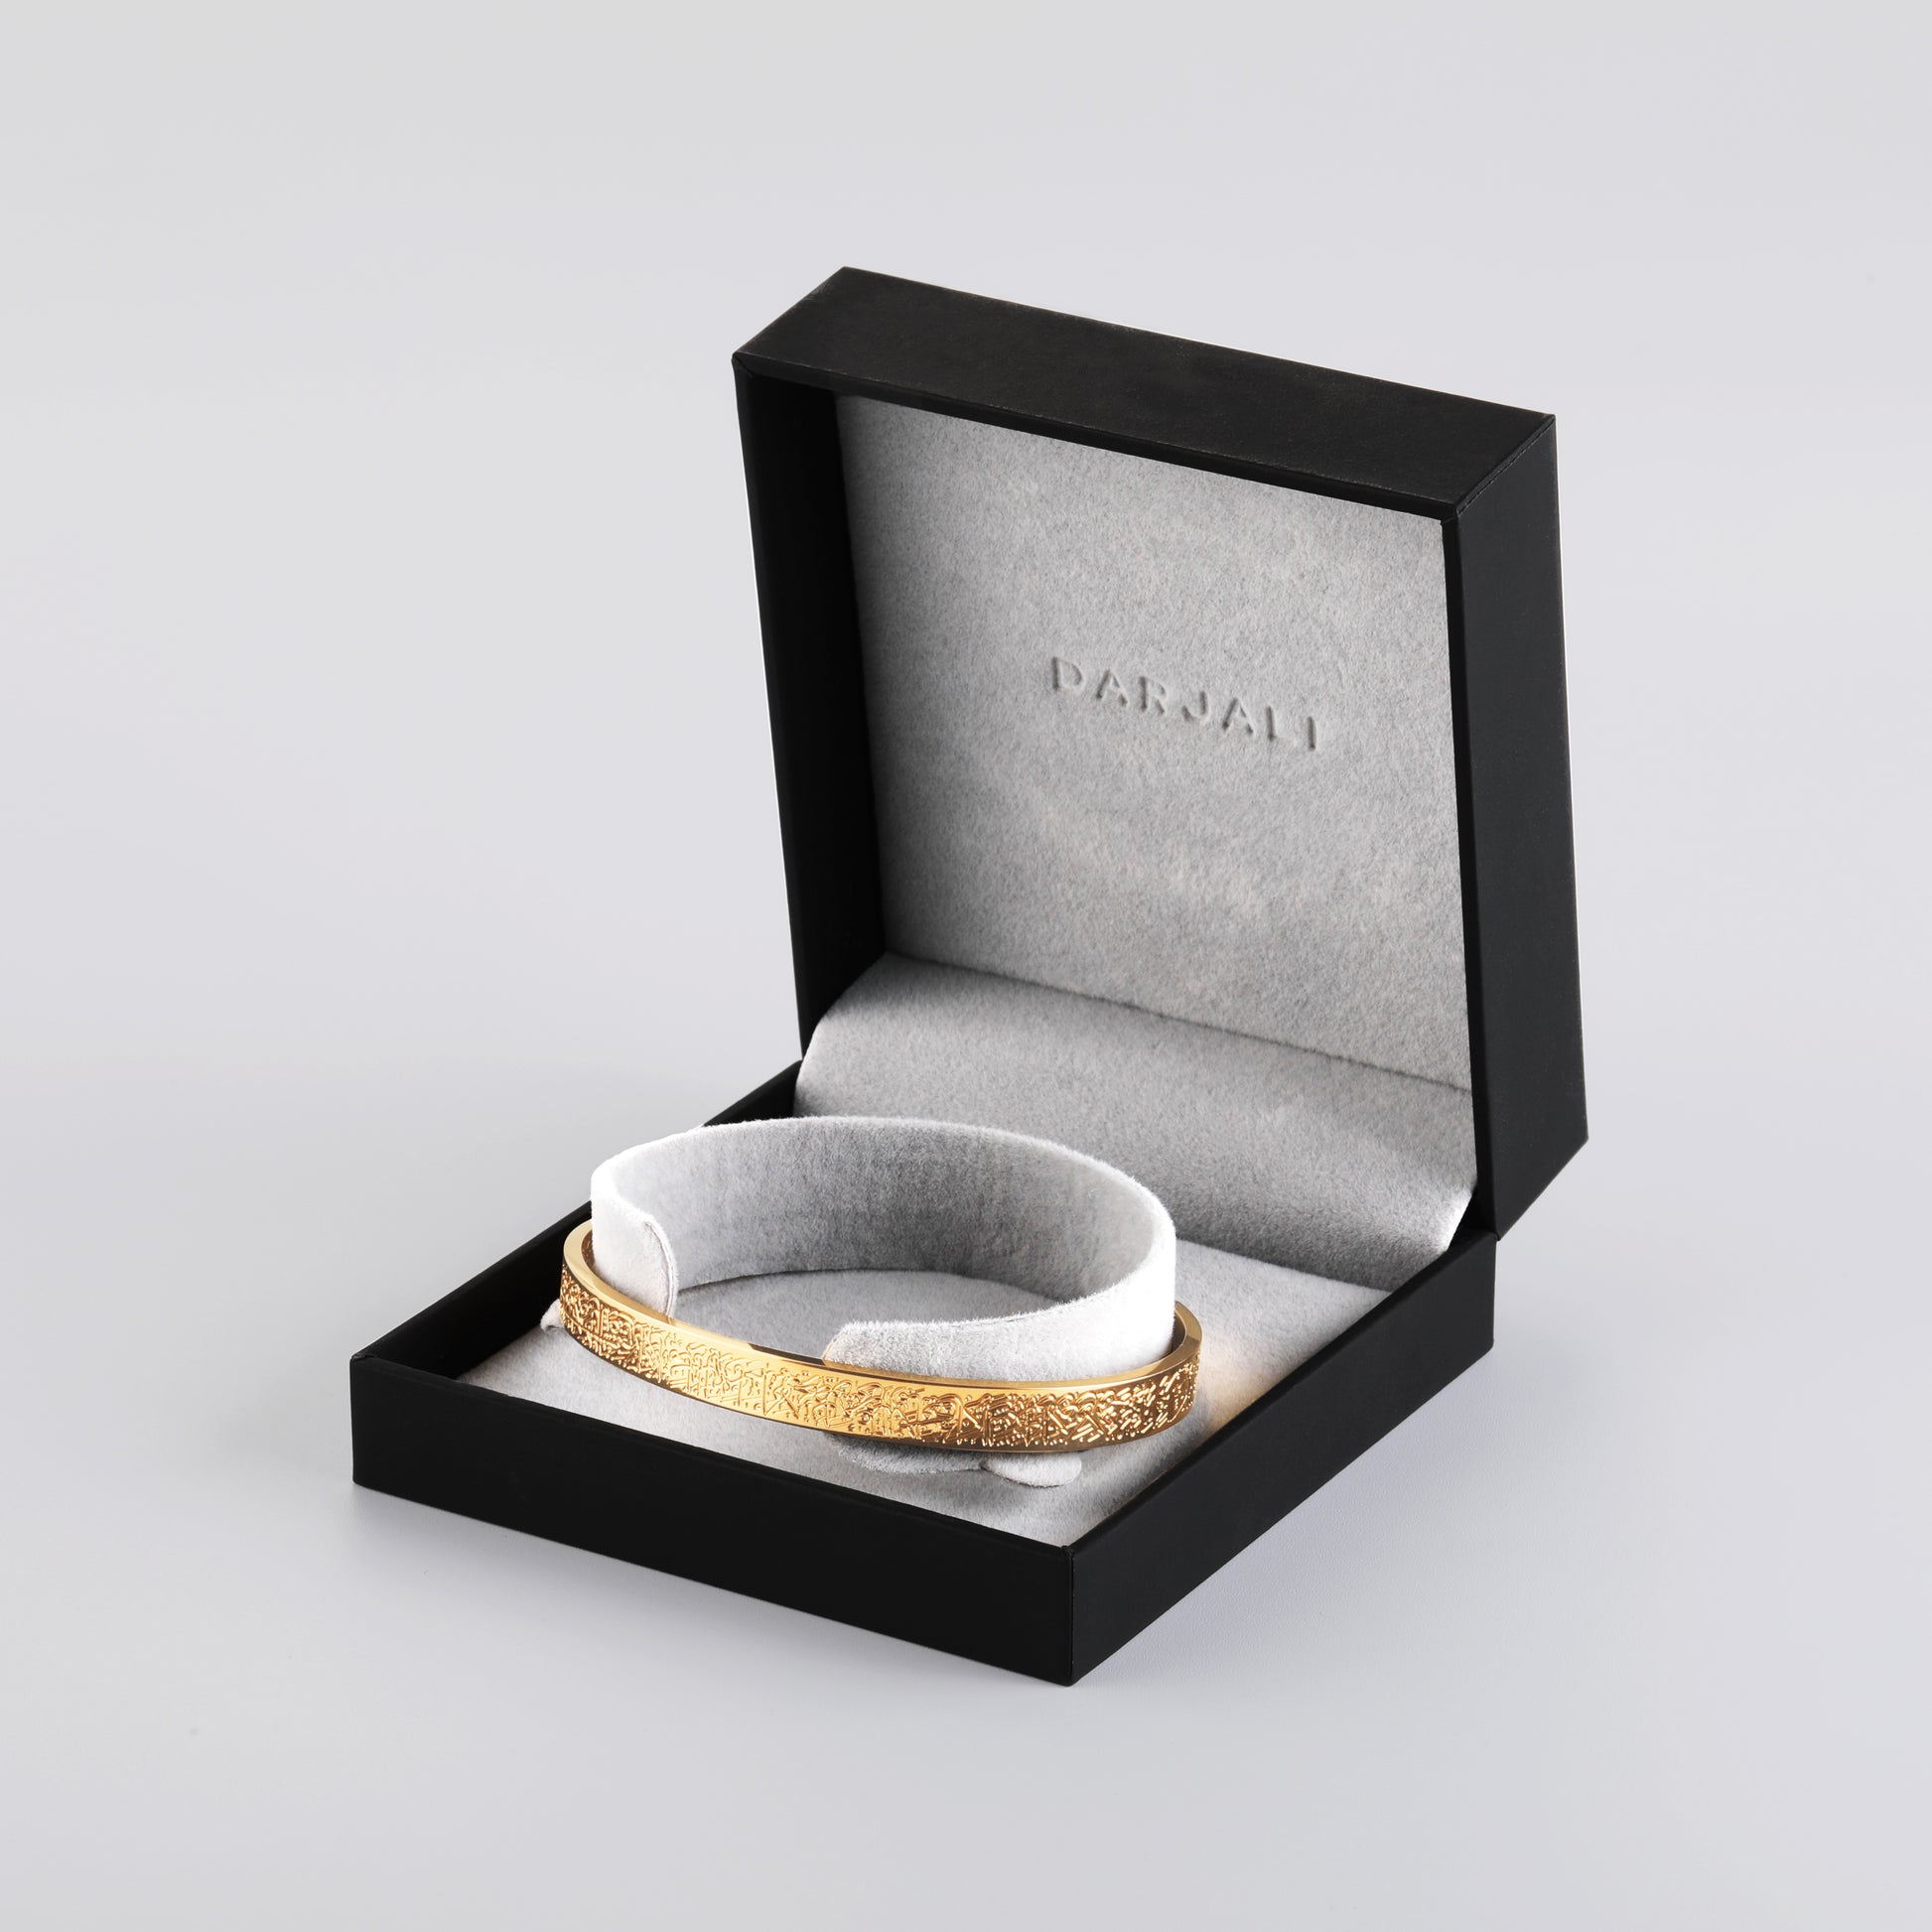 Darjali Jewelry Ayat Al-Kursi Bangle Bracelet 18K Gold Box